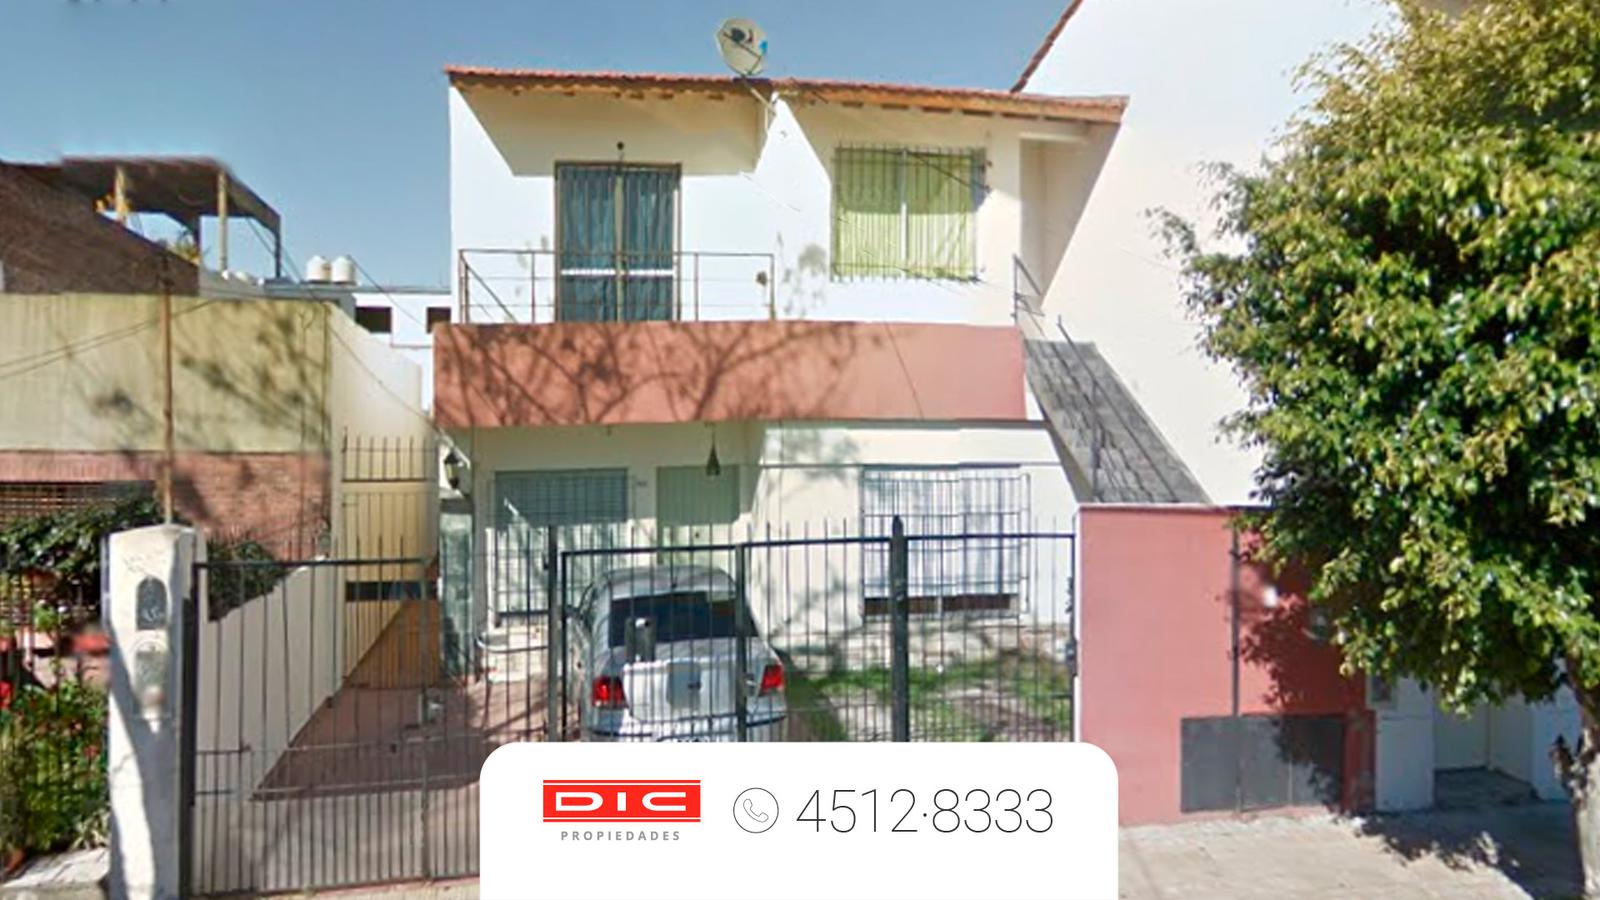 #5110677 | Rental | Horizontal Property | Carapachay (Dic Propiedades)